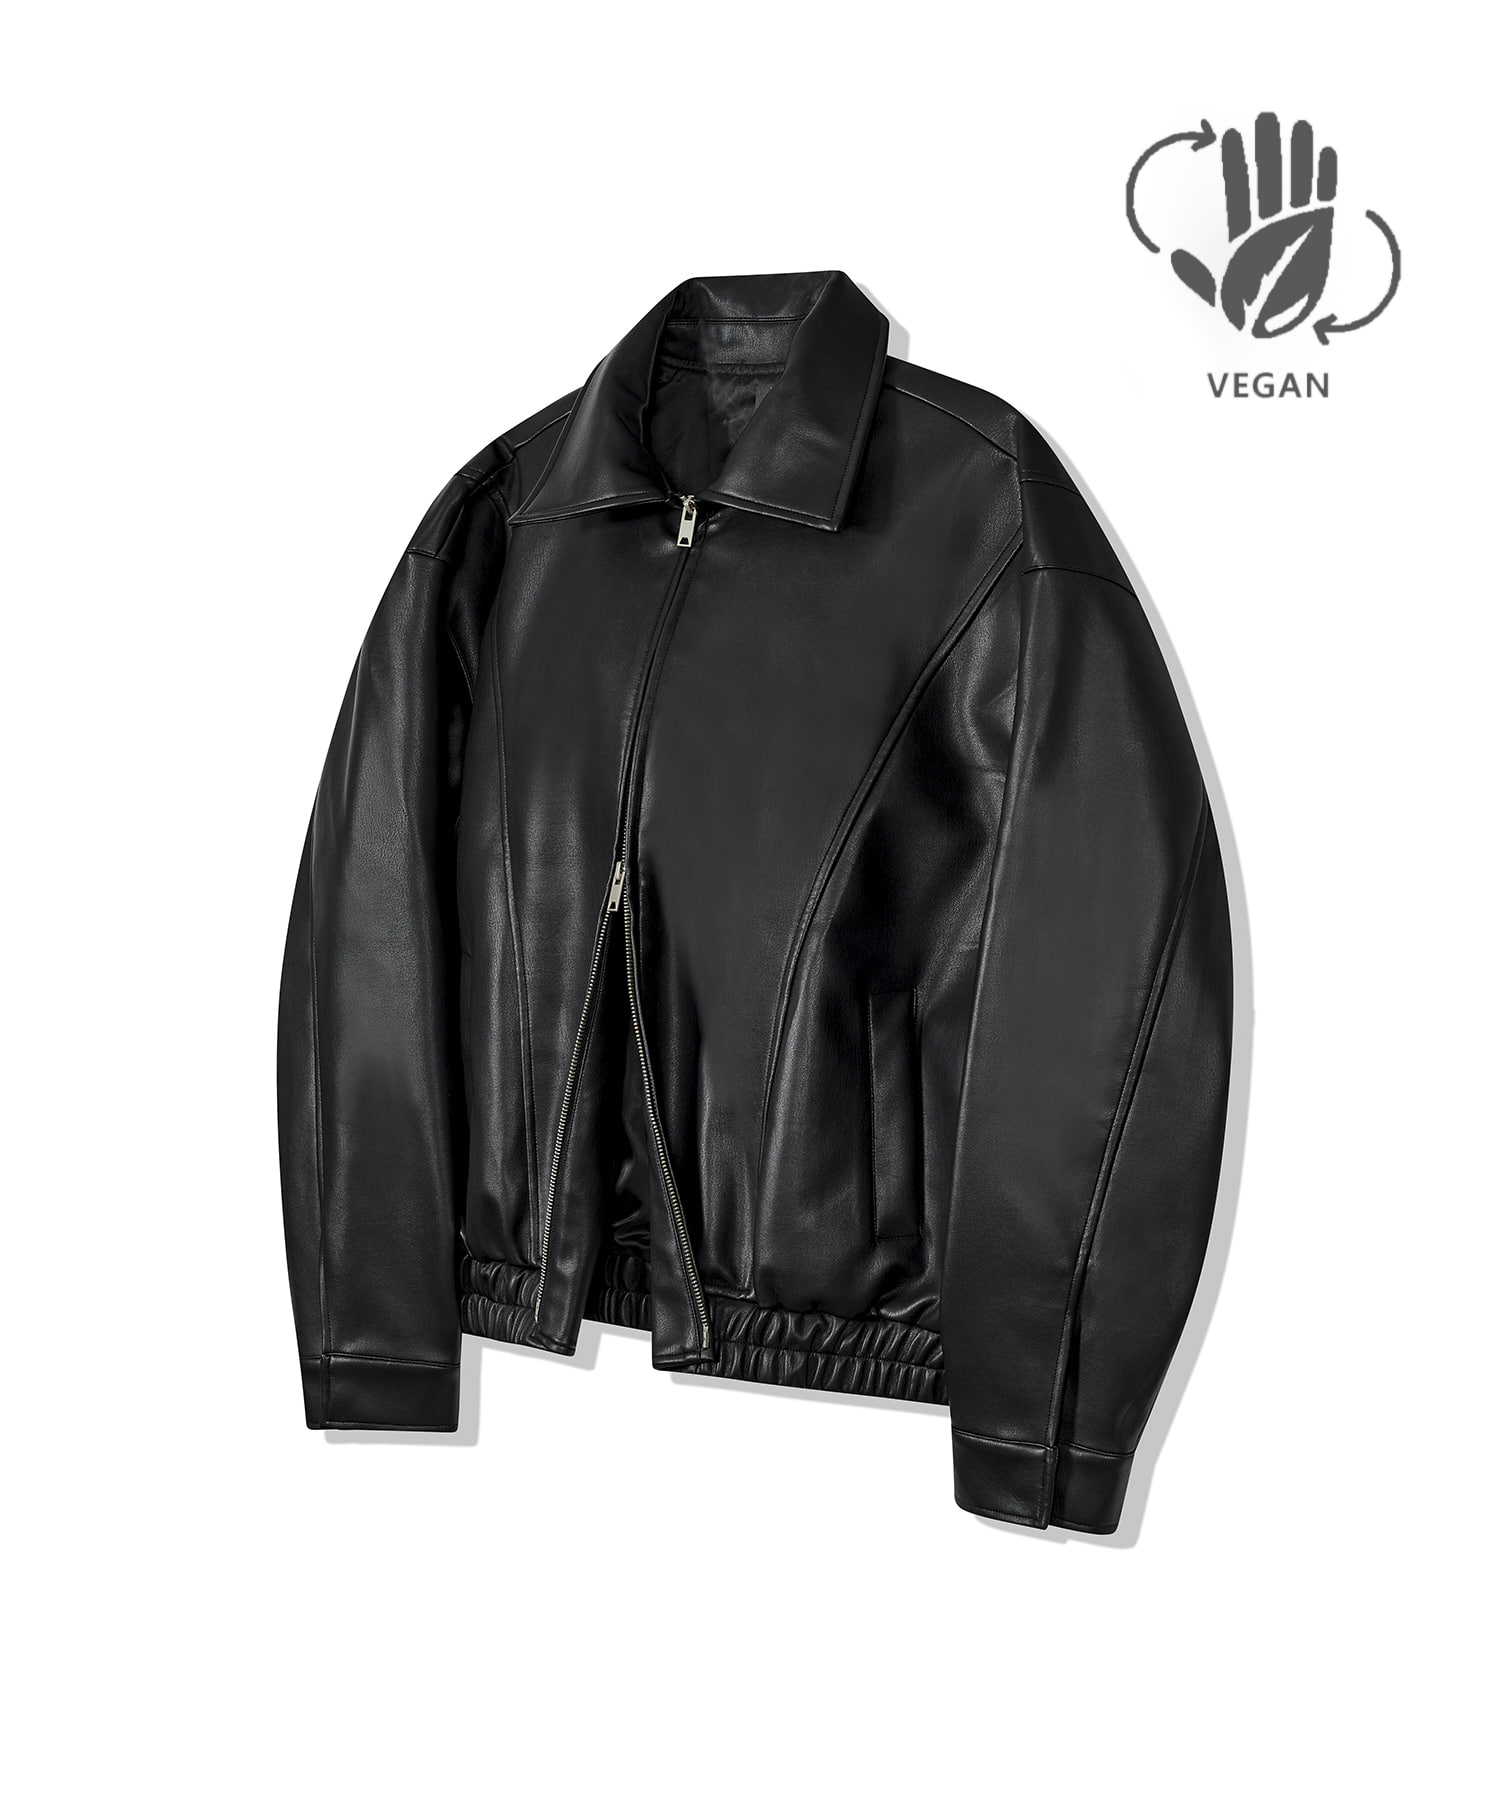 87-STAN018 [Vegan Leather] Curved Blouson Leather Jacket Black